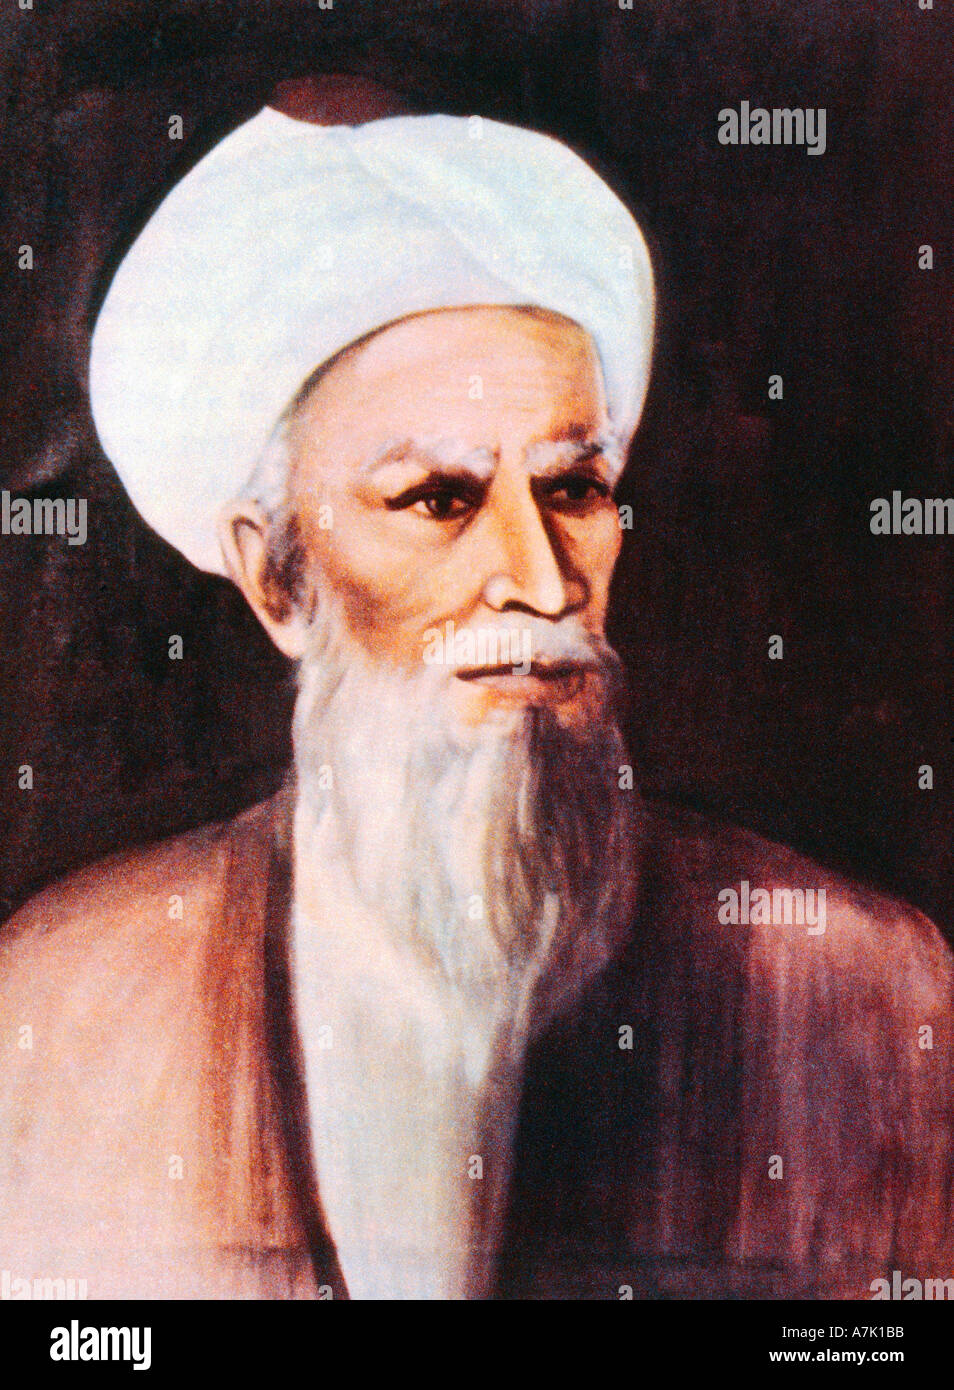 Mohammad Ibn Zakariya Al rhazes 864 930 Ad filosofo autore astronomia ottica fisica matematica Abu Bakr Mohammad Ibn Zakar Foto Stock